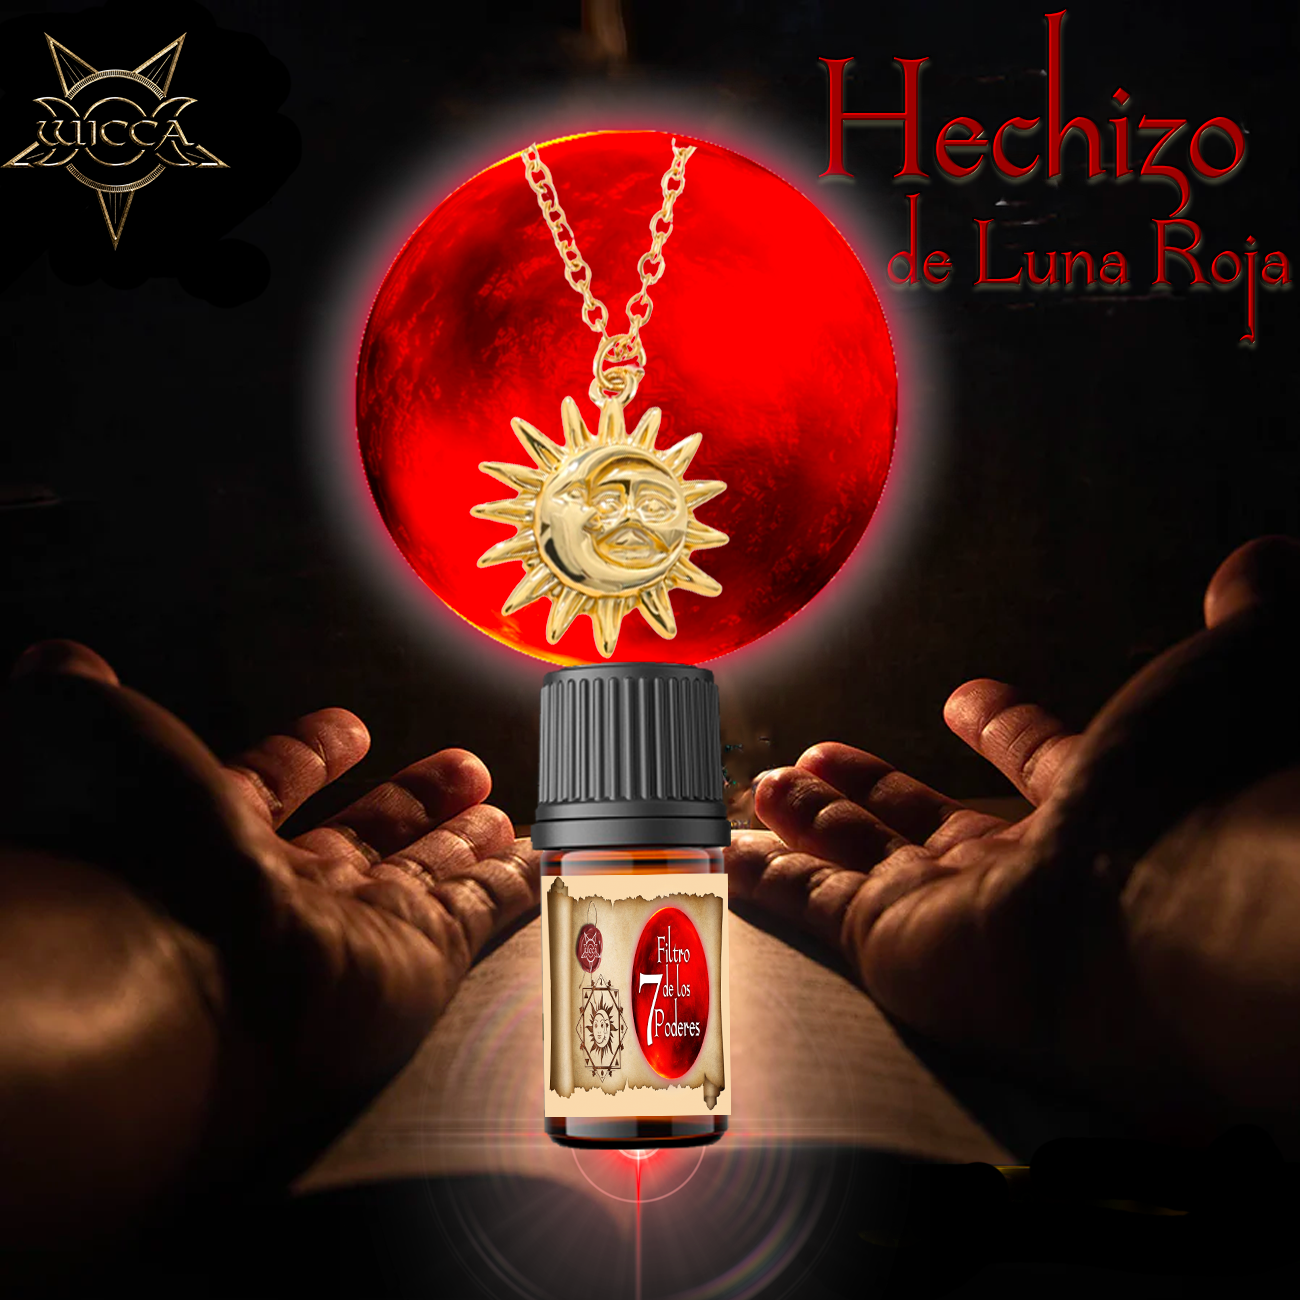 Hechizo de Luna Roja